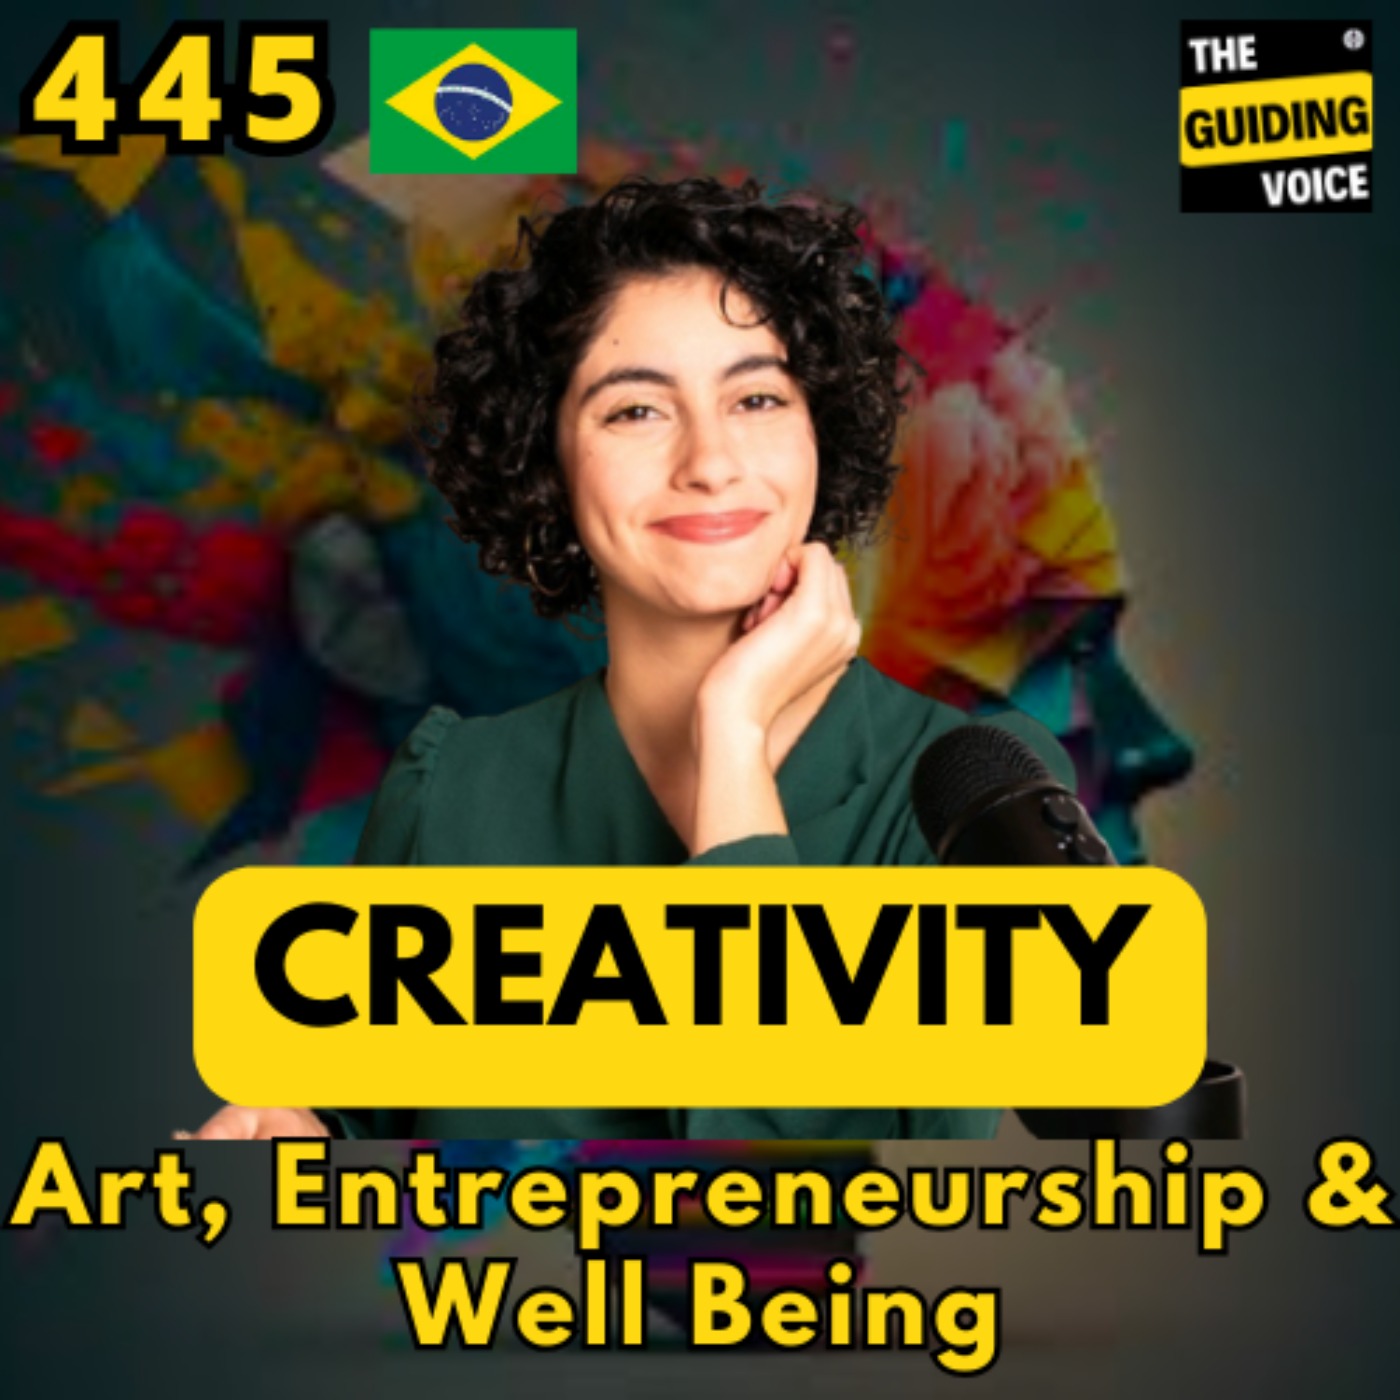 Art, Entrepreneurship & well being: Creative conversation with Juliana Naufel | #TGVGlobalSpeakerFestival | #TGV445